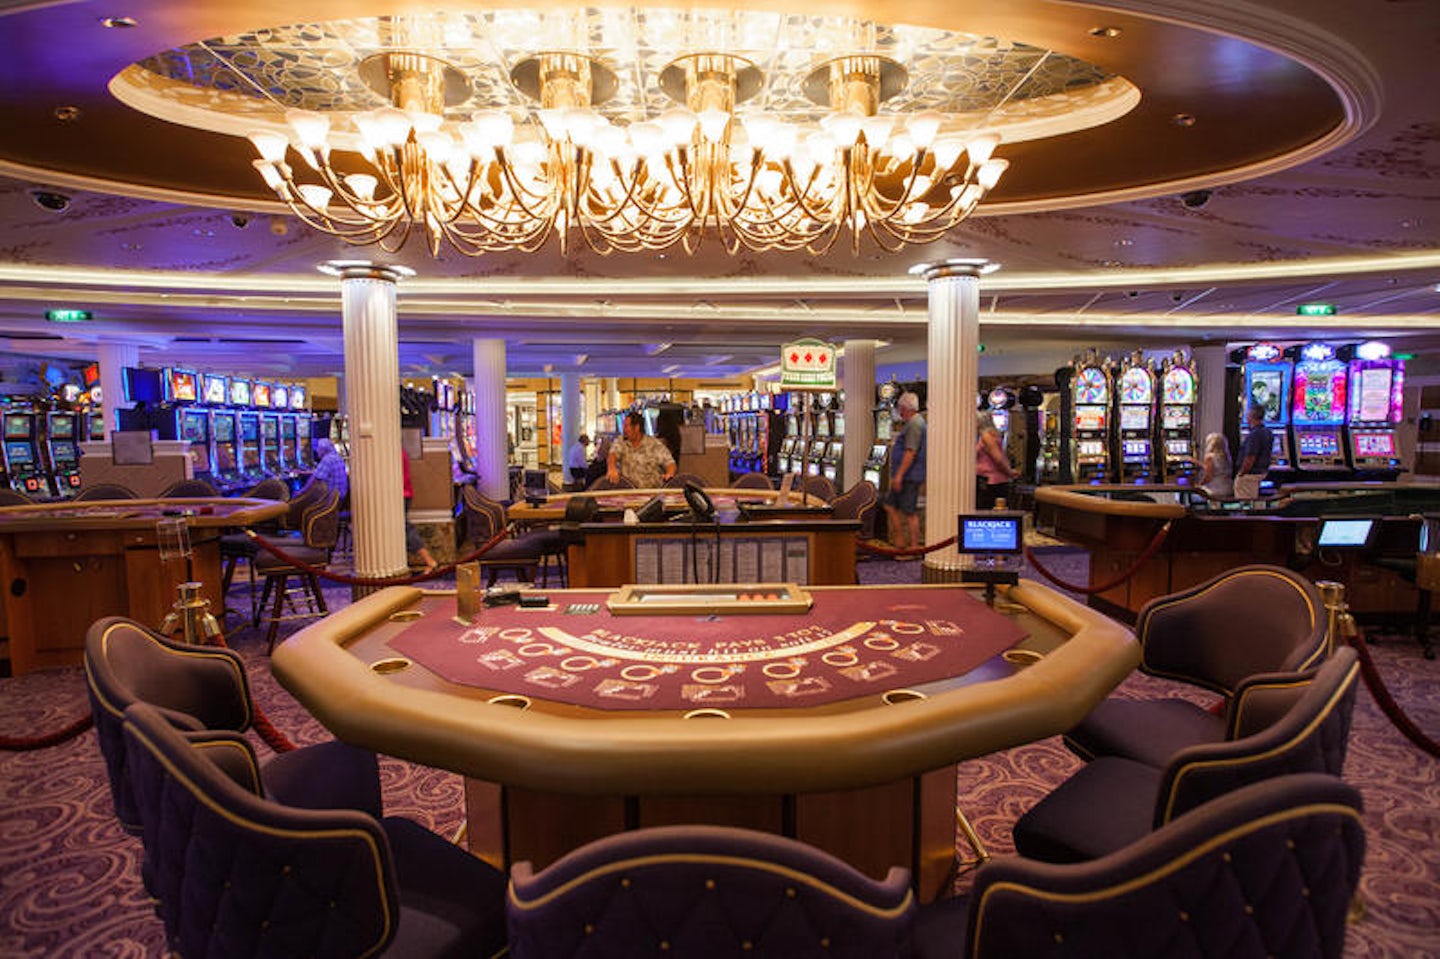 Fortunes Casino on Celebrity Equinox